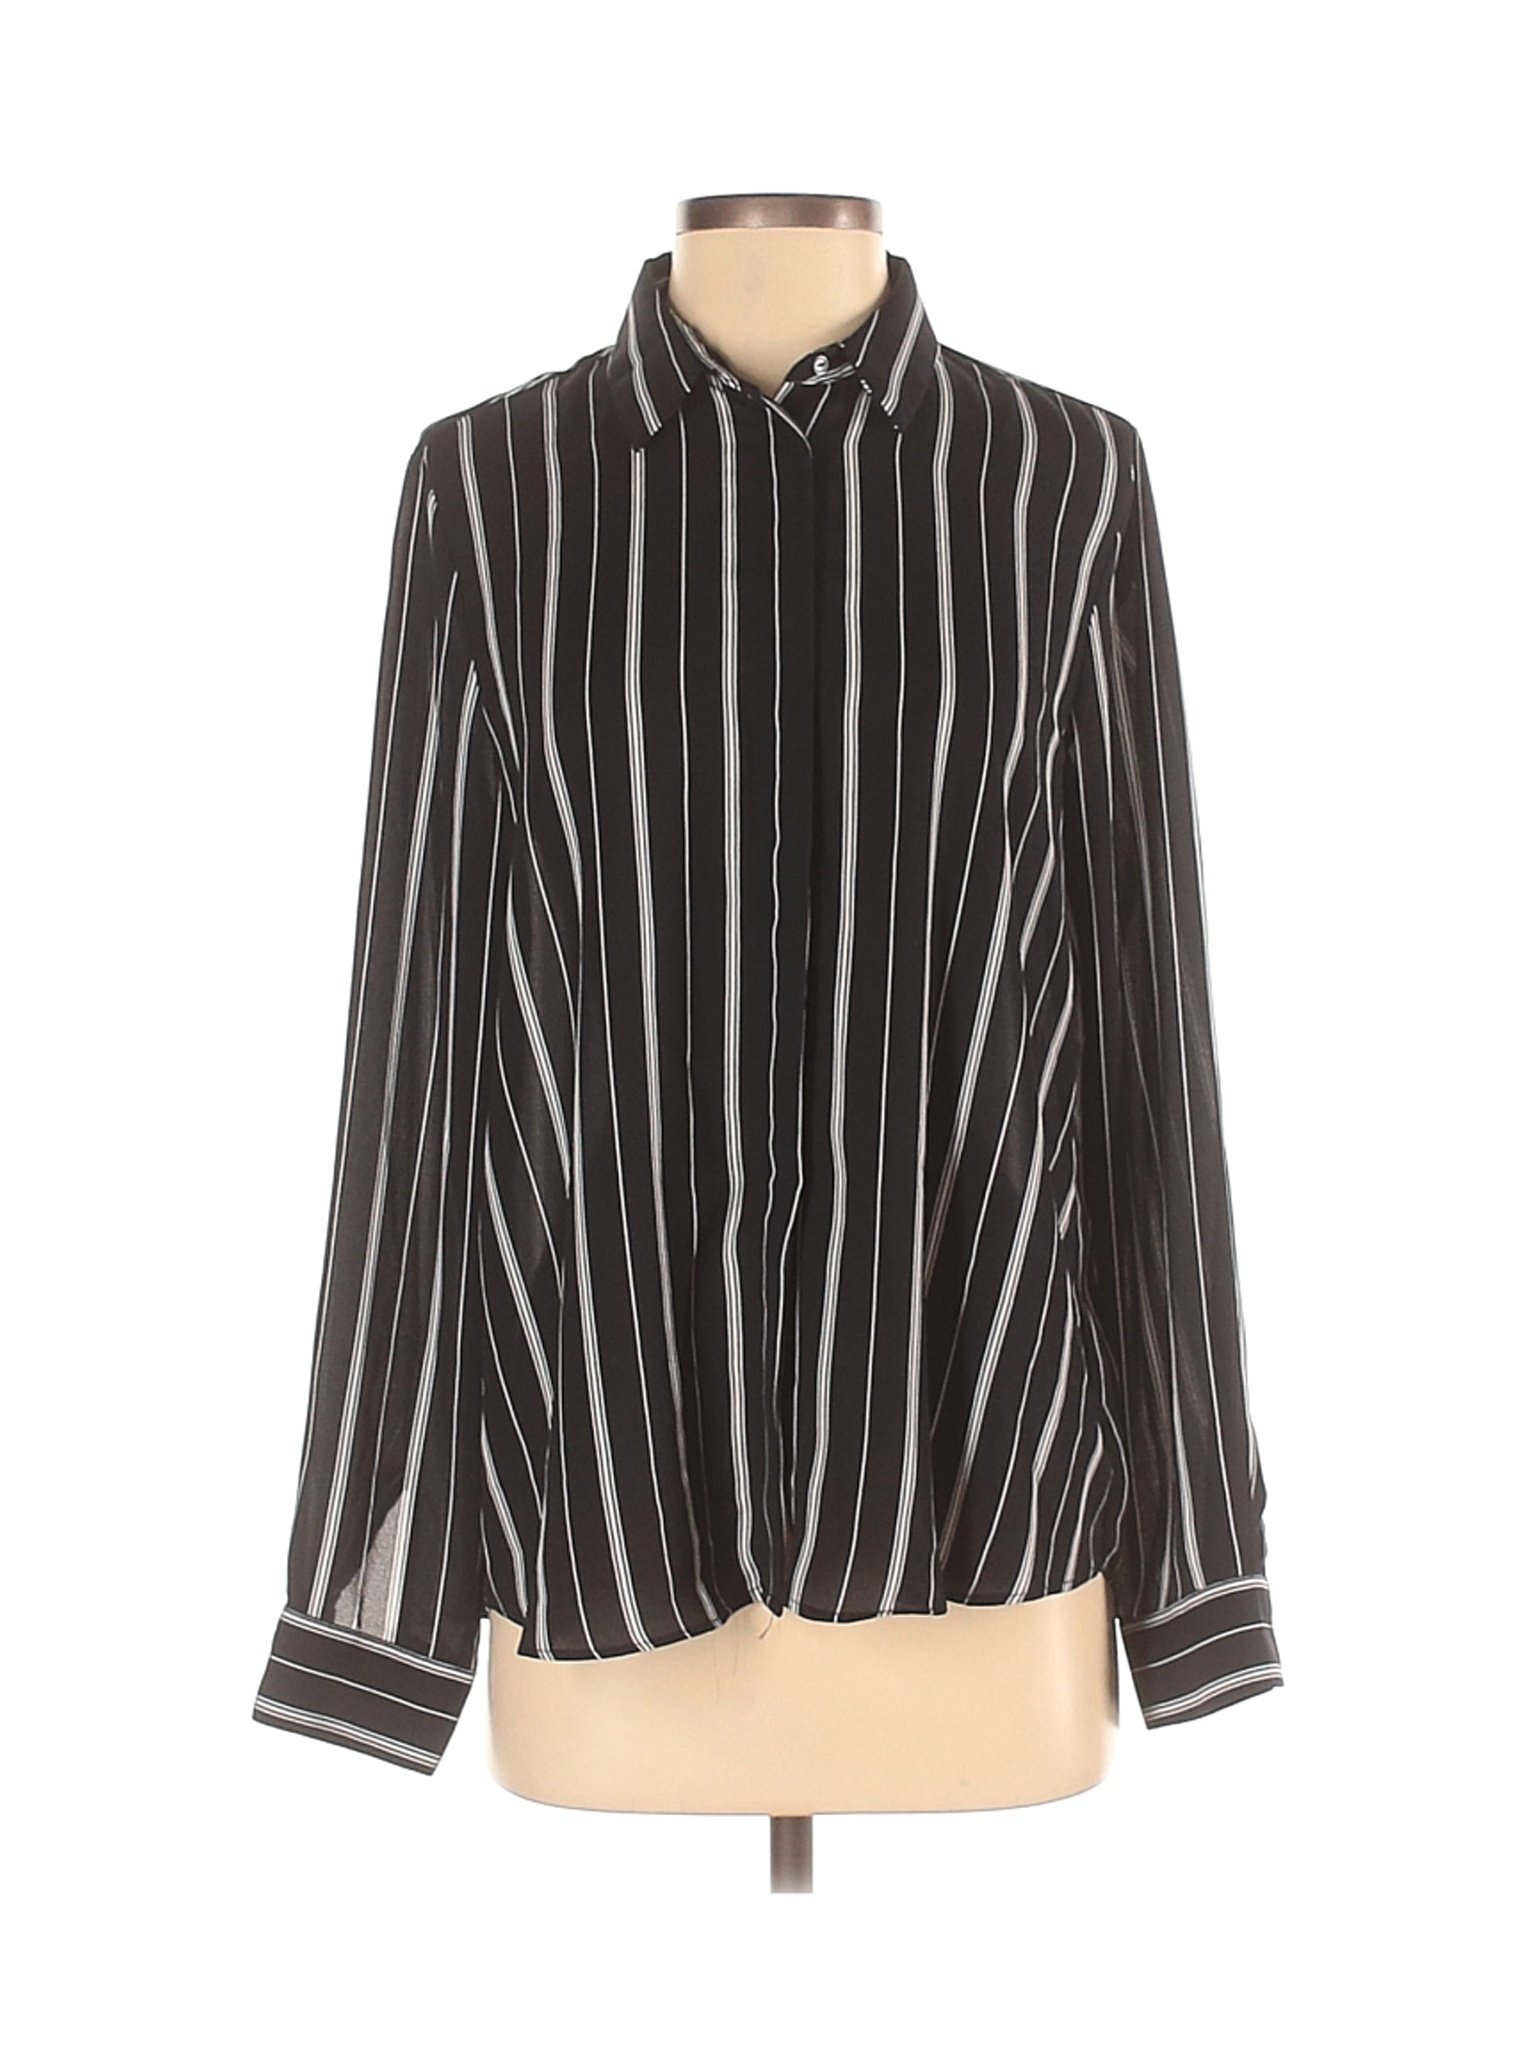 H&M Women Black Long Sleeve Blouse 4 | eBay